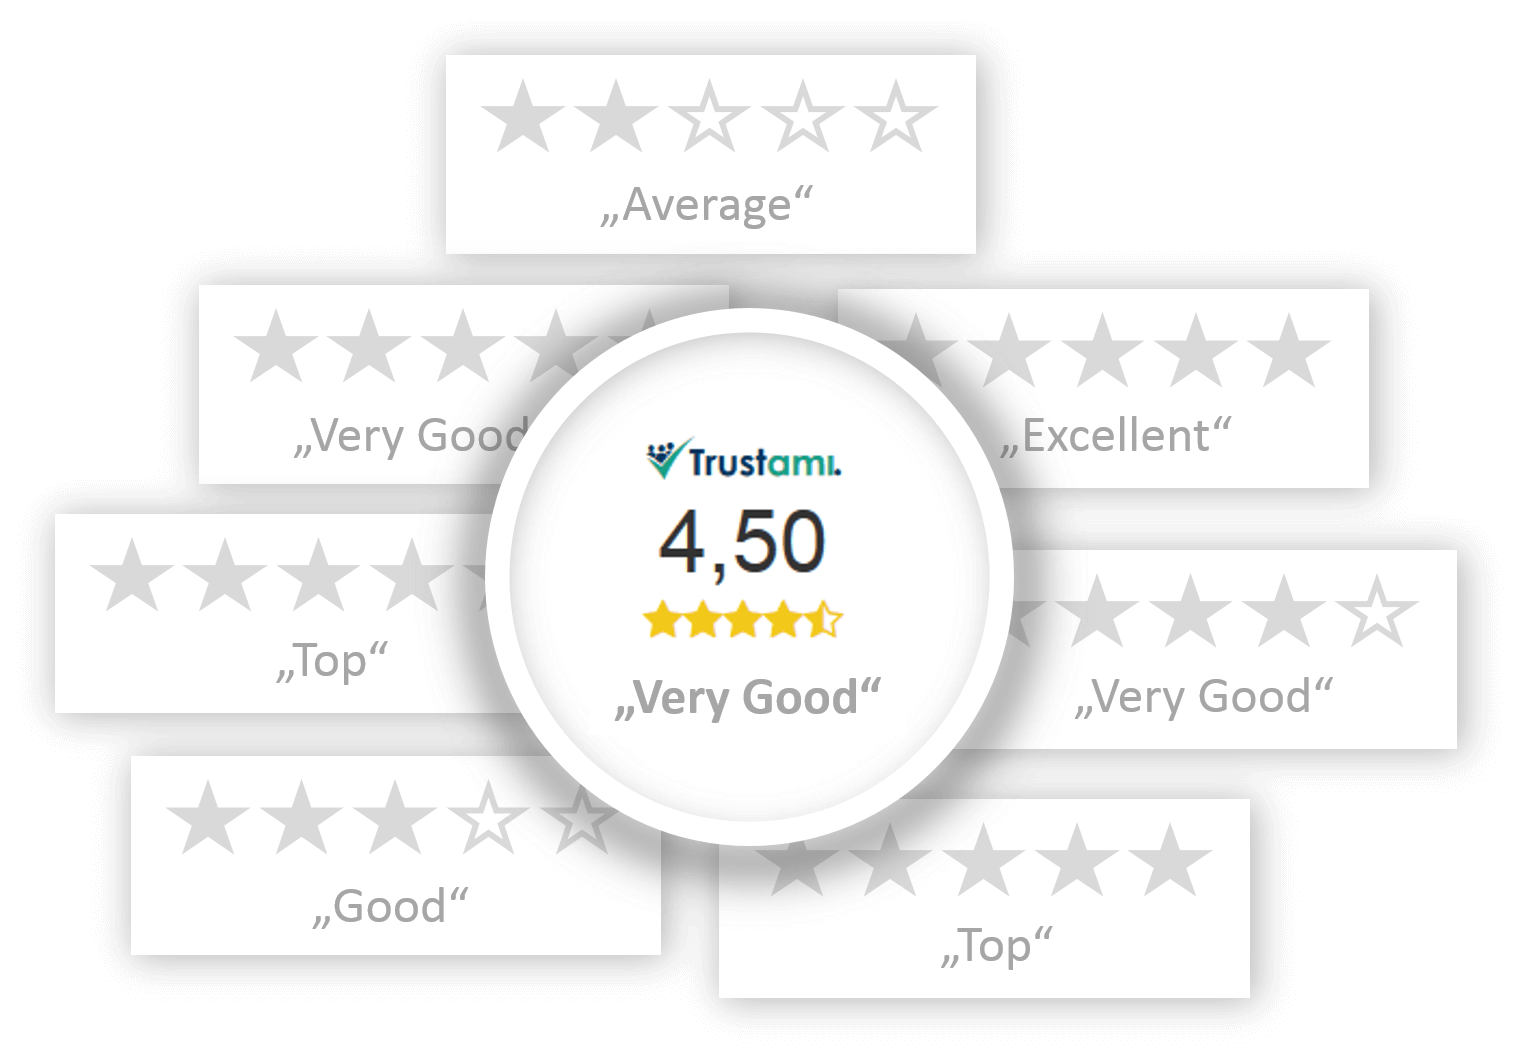 Trustami aggregates all reviews